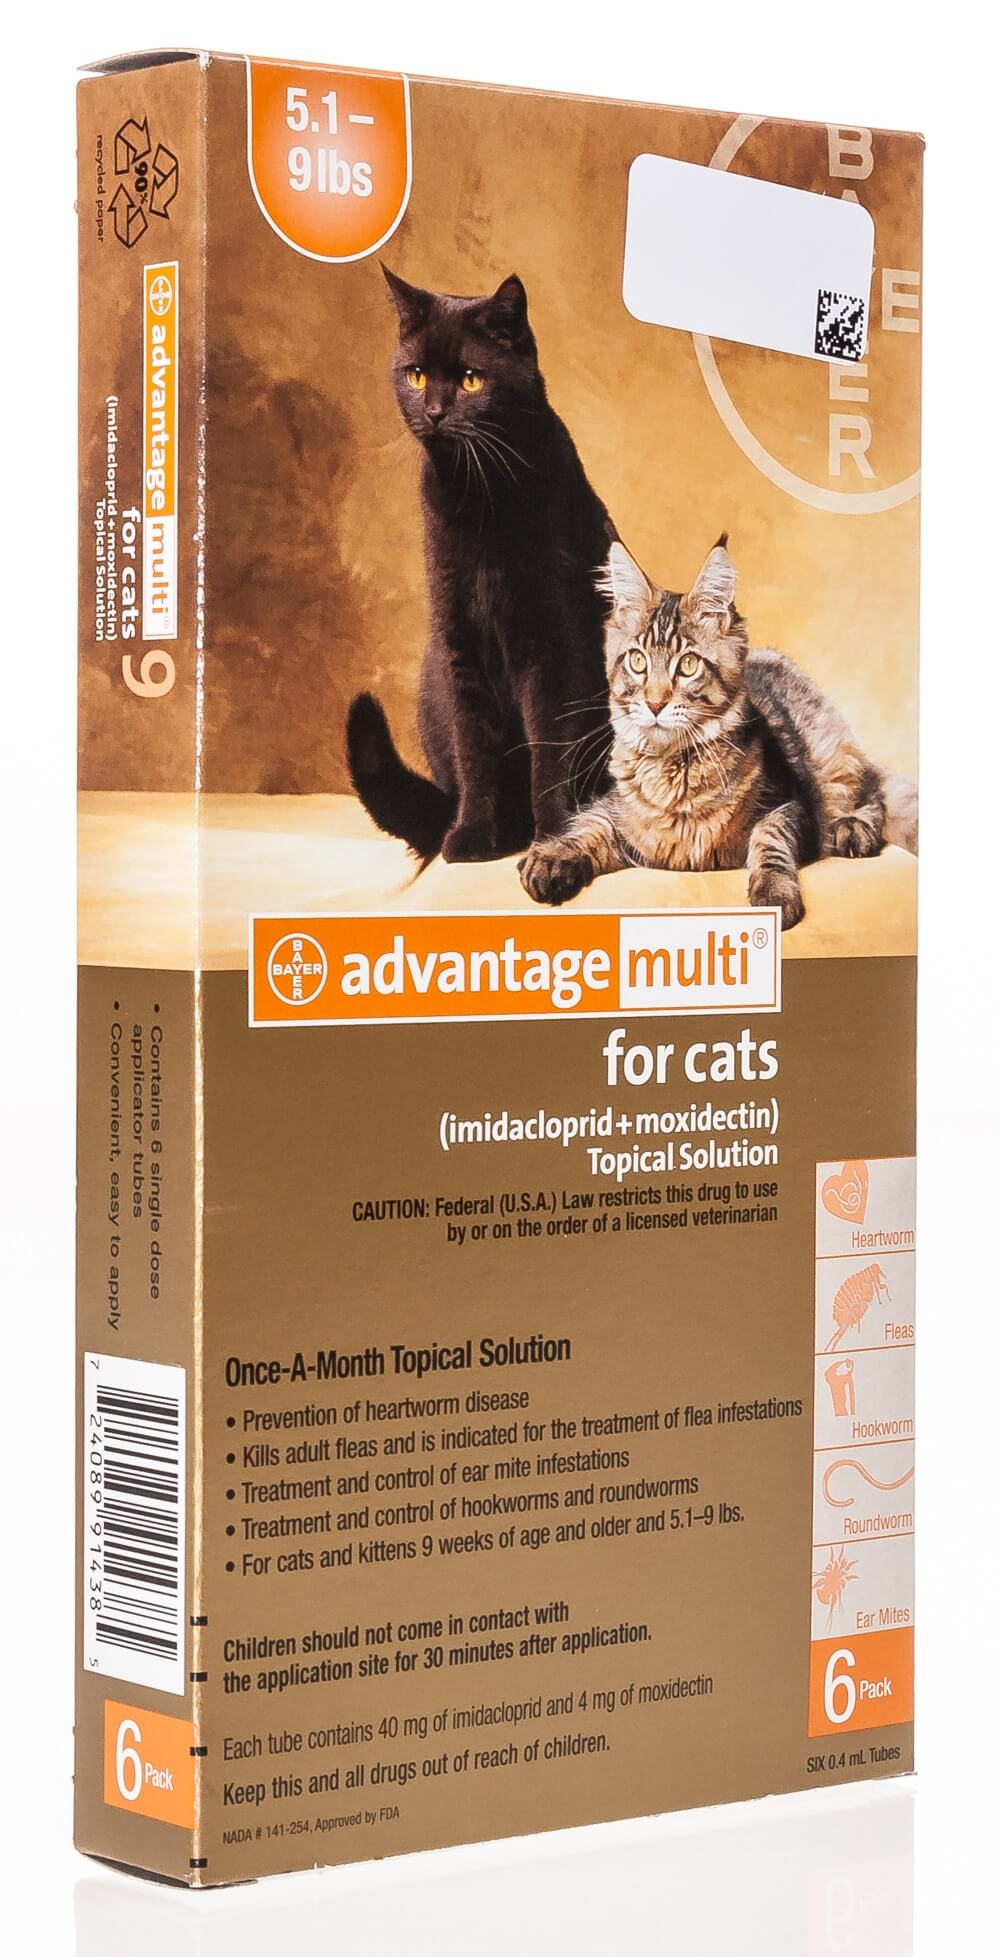 advantage-multi-for-cats-santa-cruz-animal-health